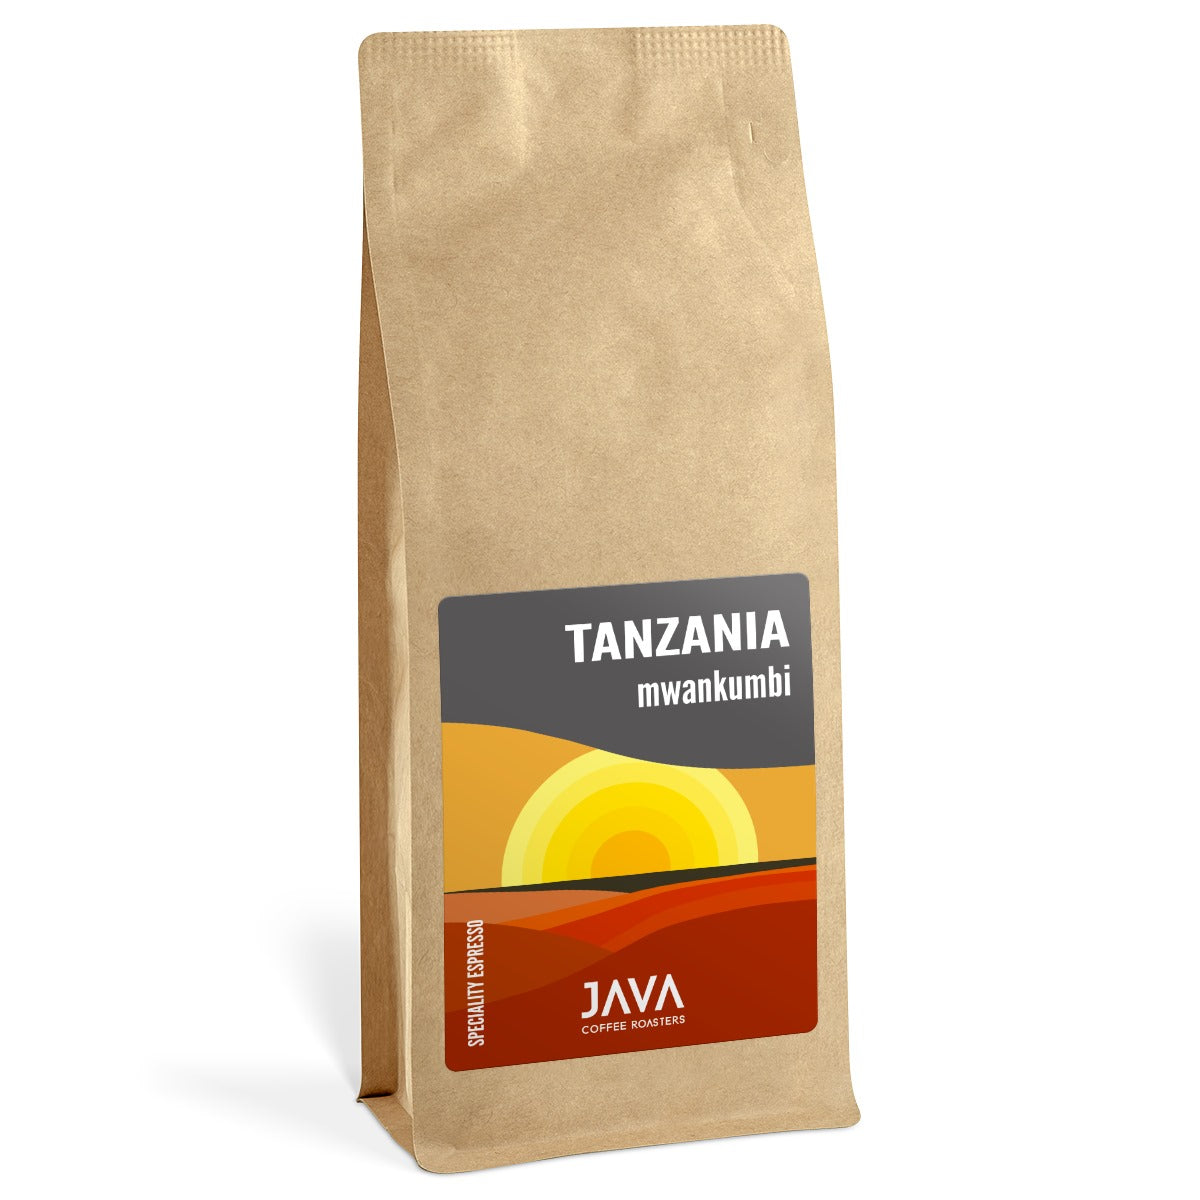 Tanzania Mwankumbi 1 kg